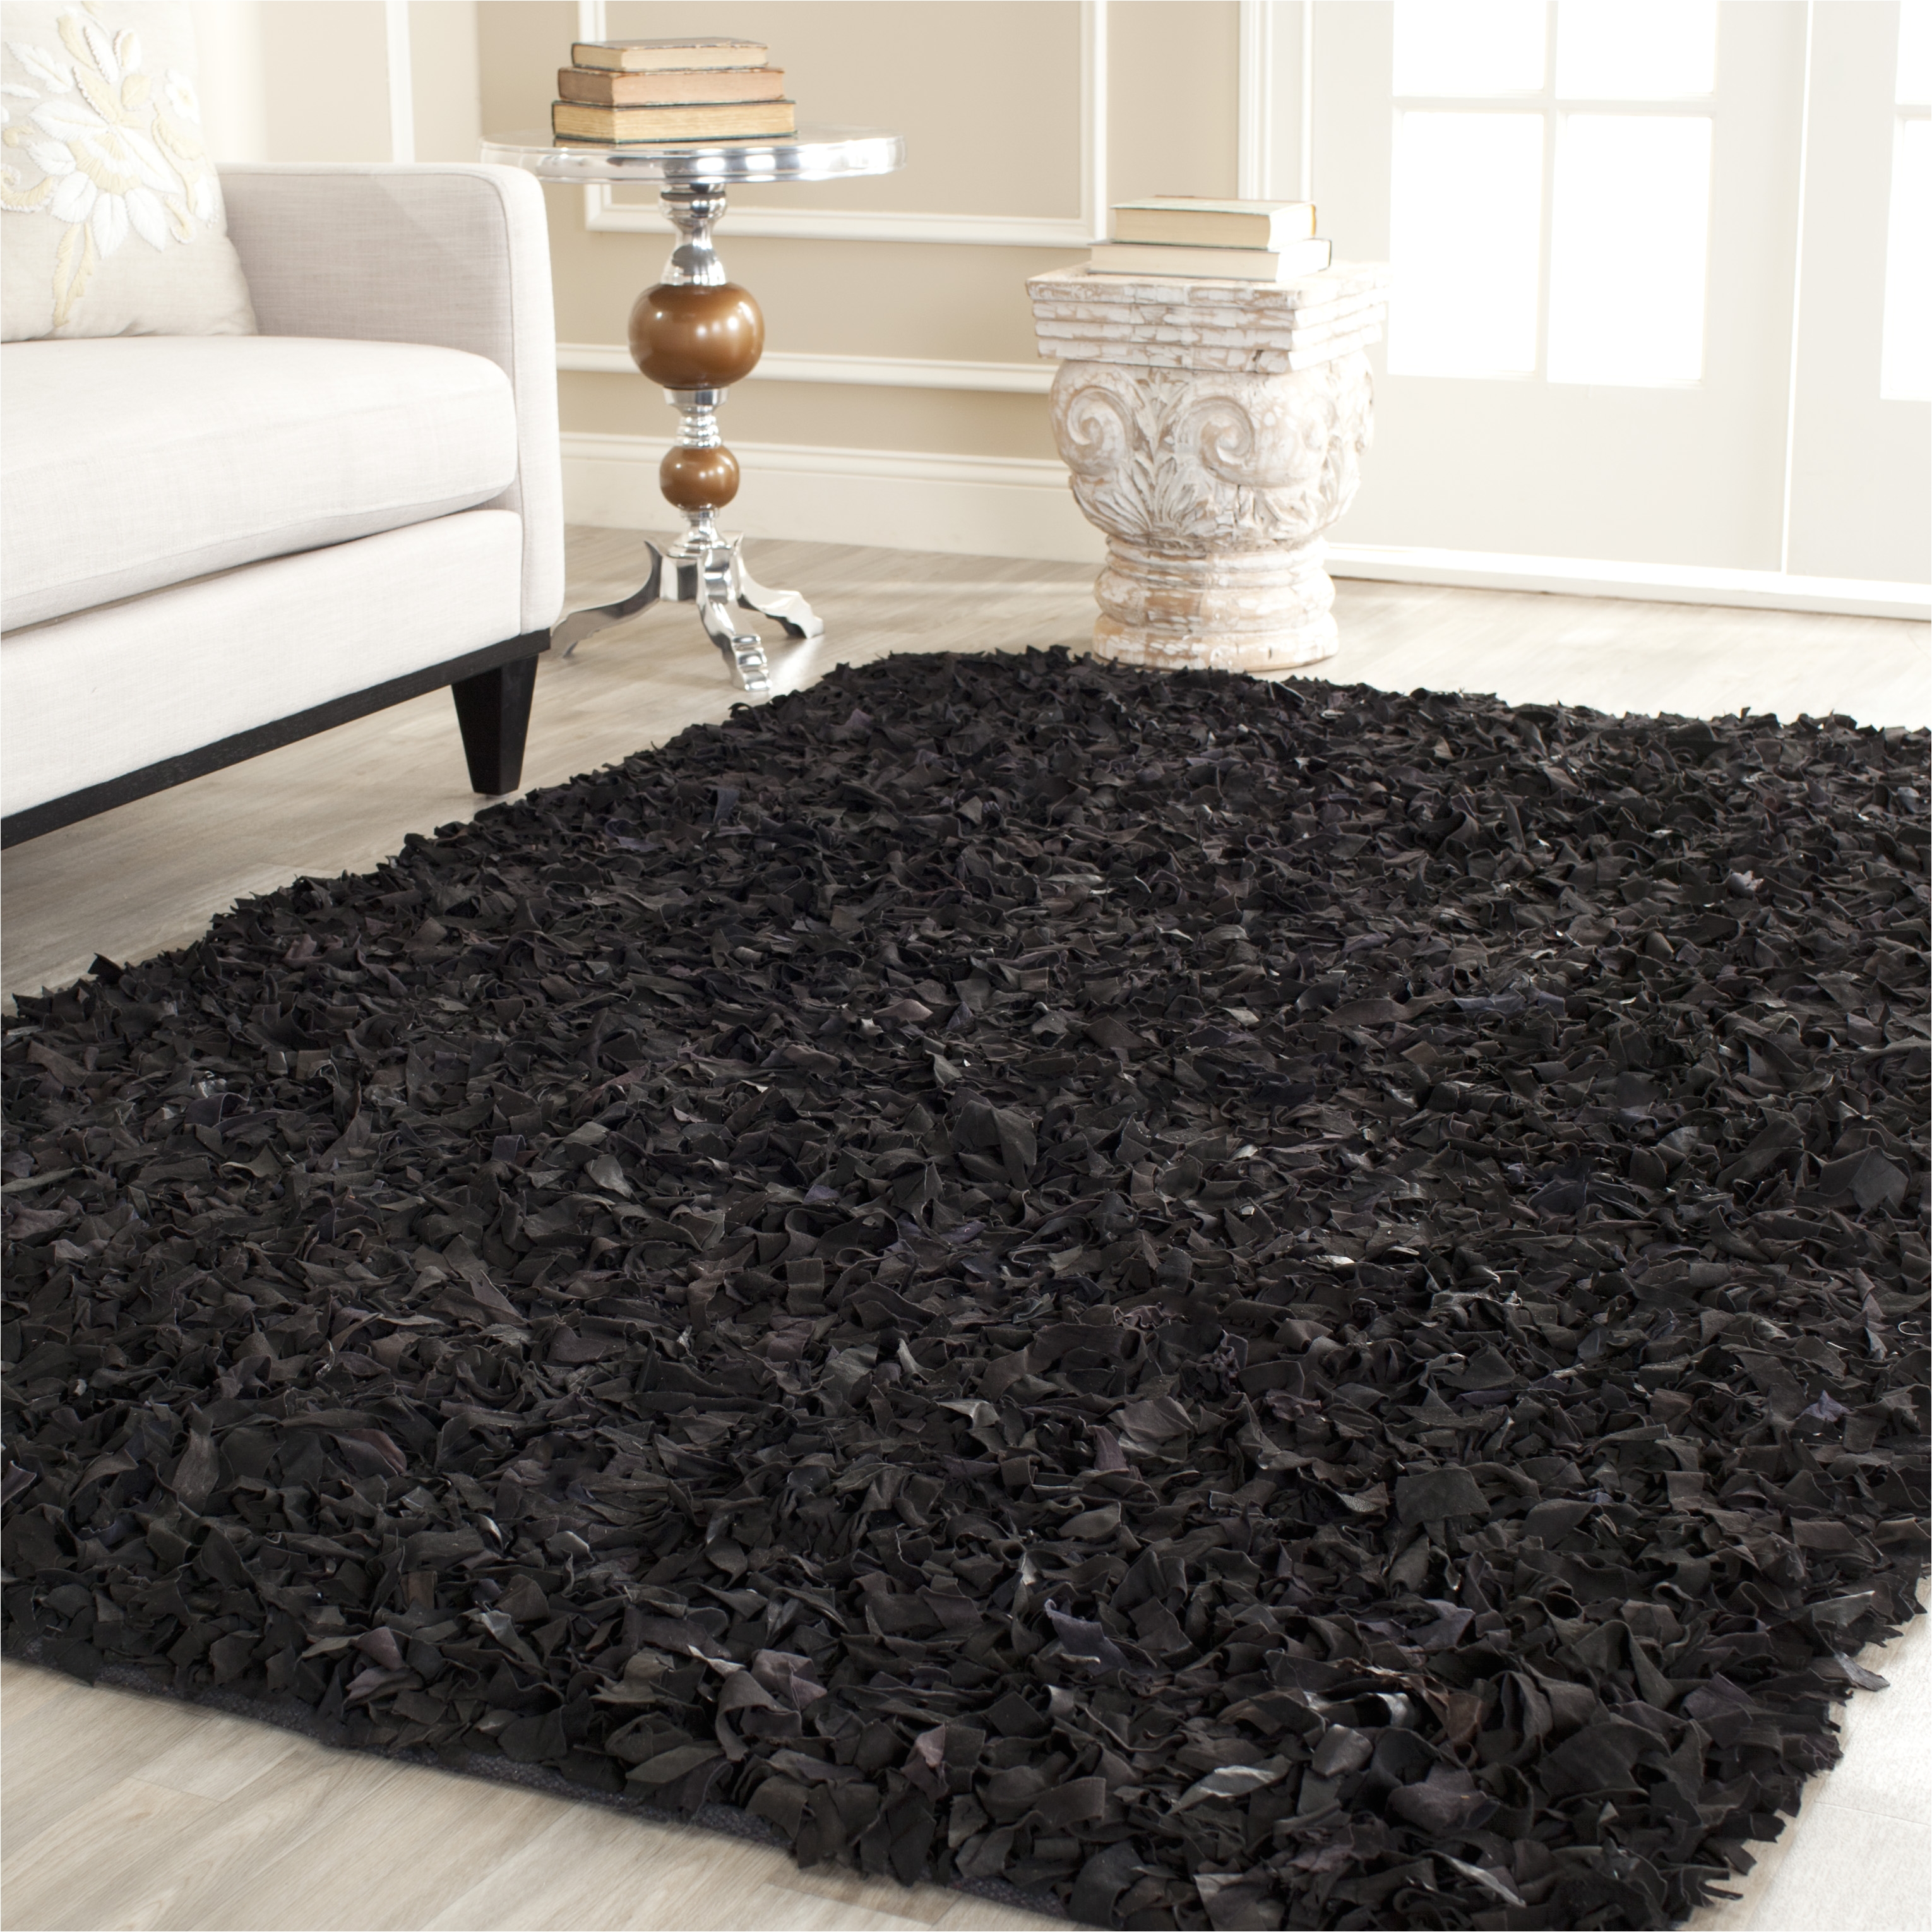 grey rug target awesome coffee tables grey and white shag rug vindum rug grey rug tar with safavieh rugs target